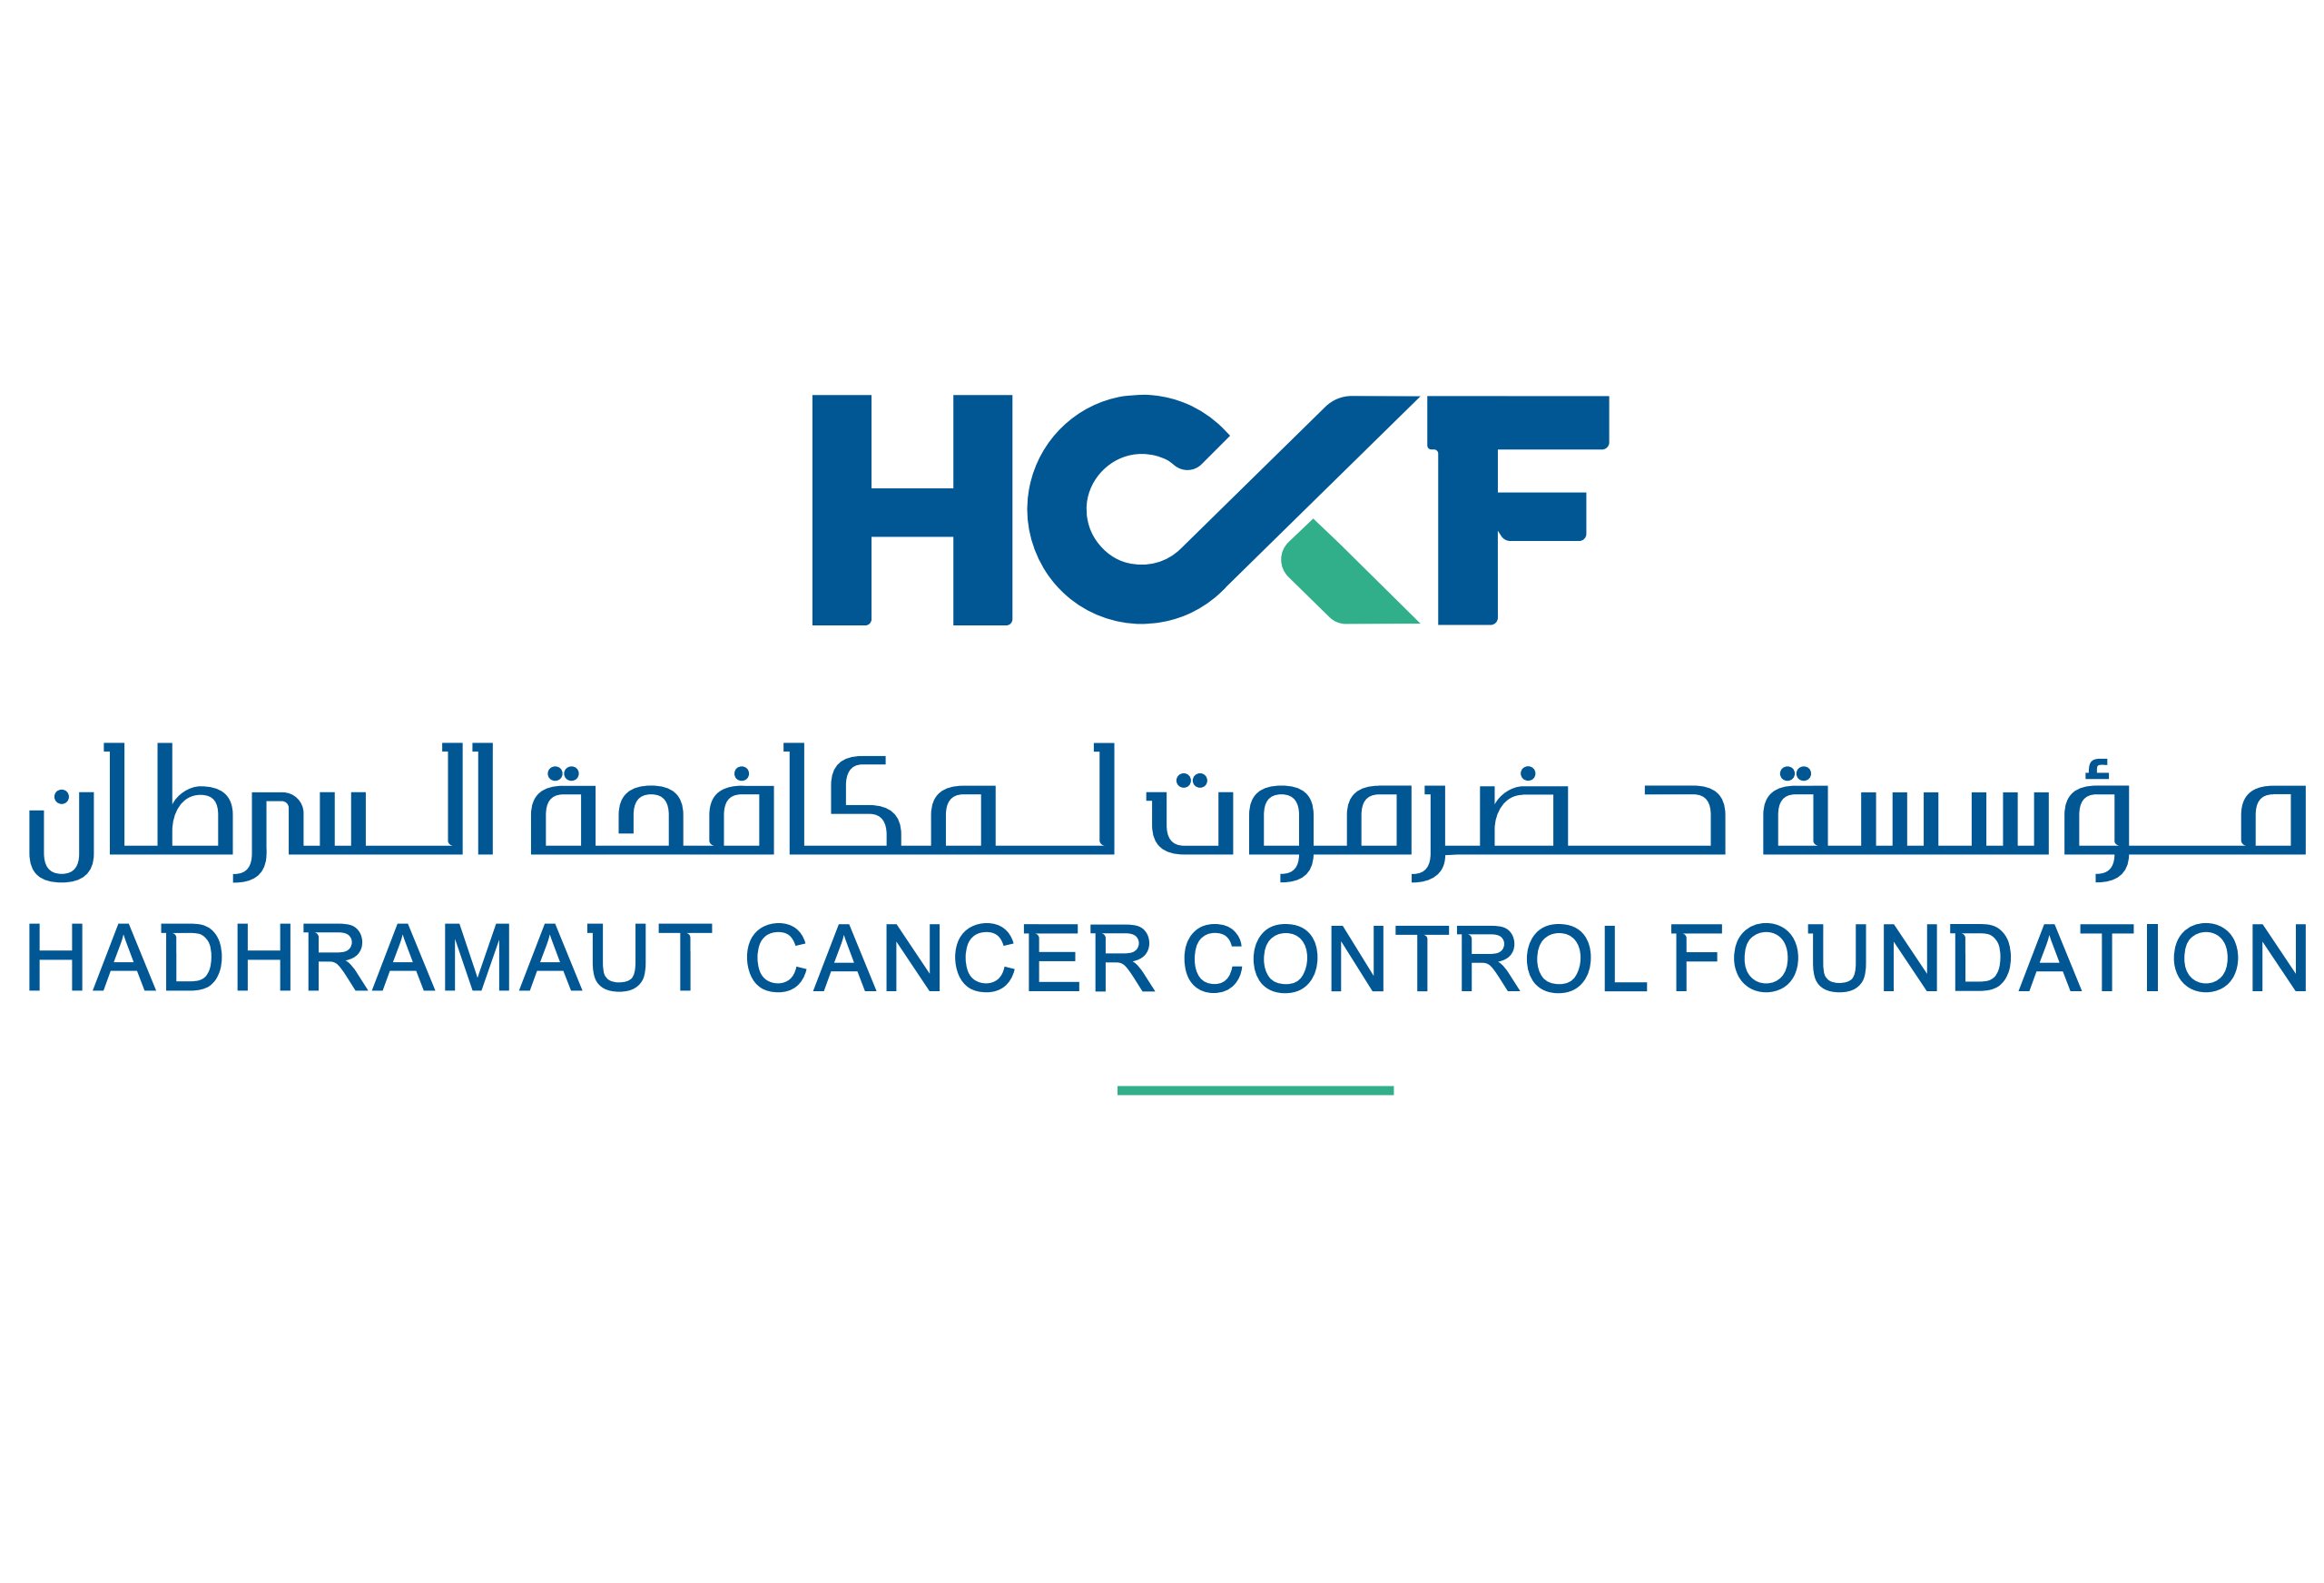 Hadhramaut Cancer Control Foundation